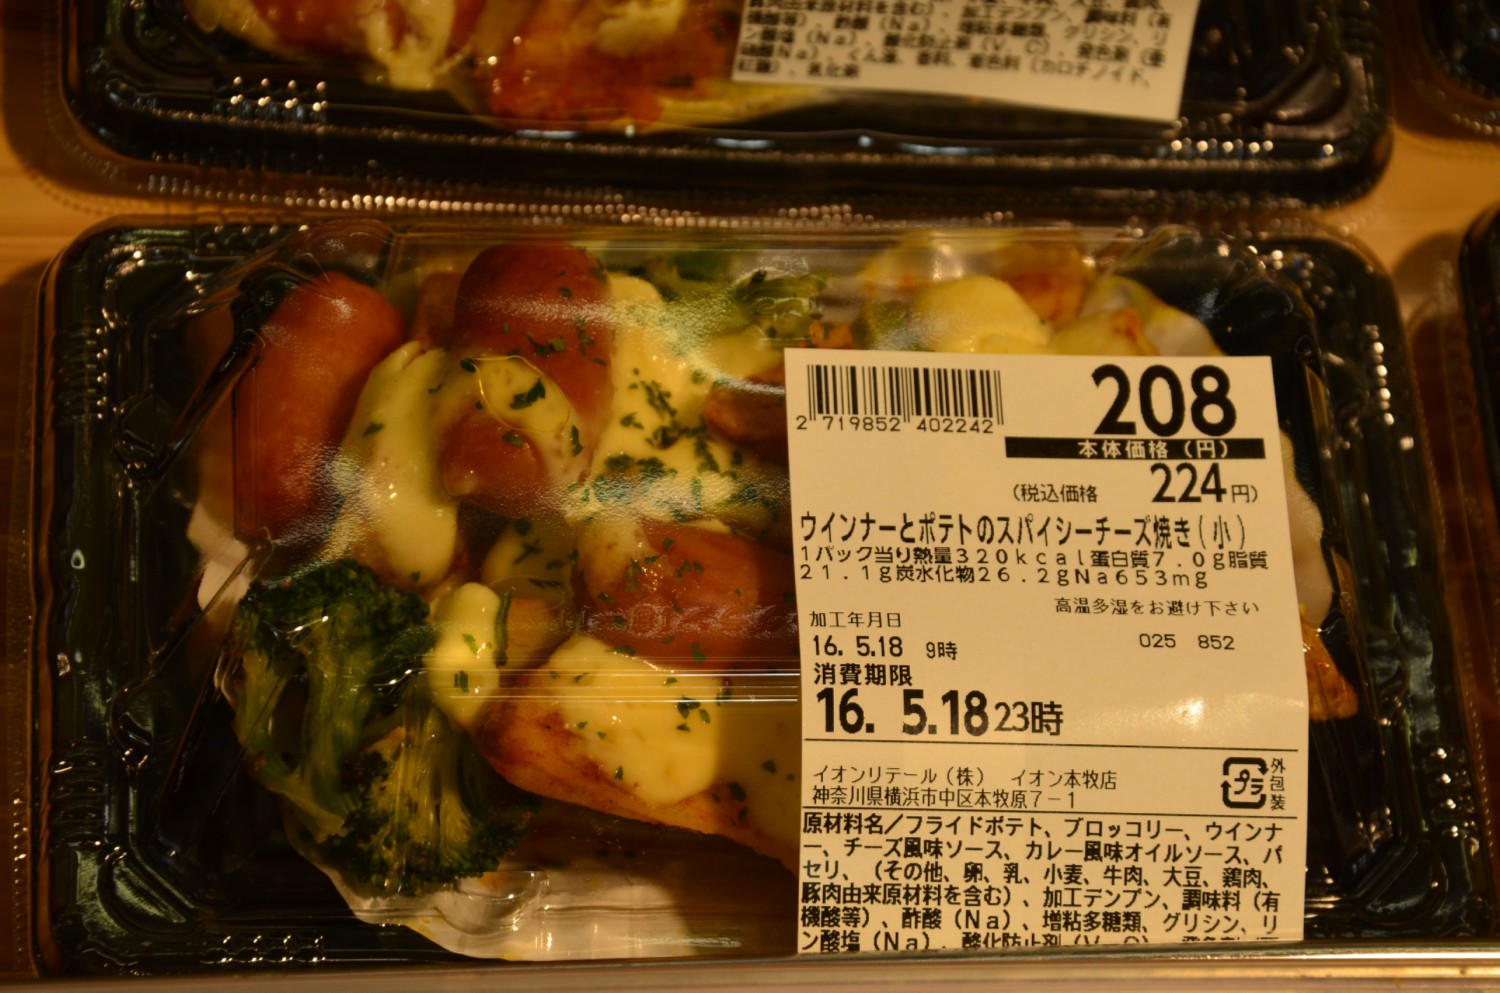 sult kolbaszkak krumplival es brokkolival 1.9 Euro